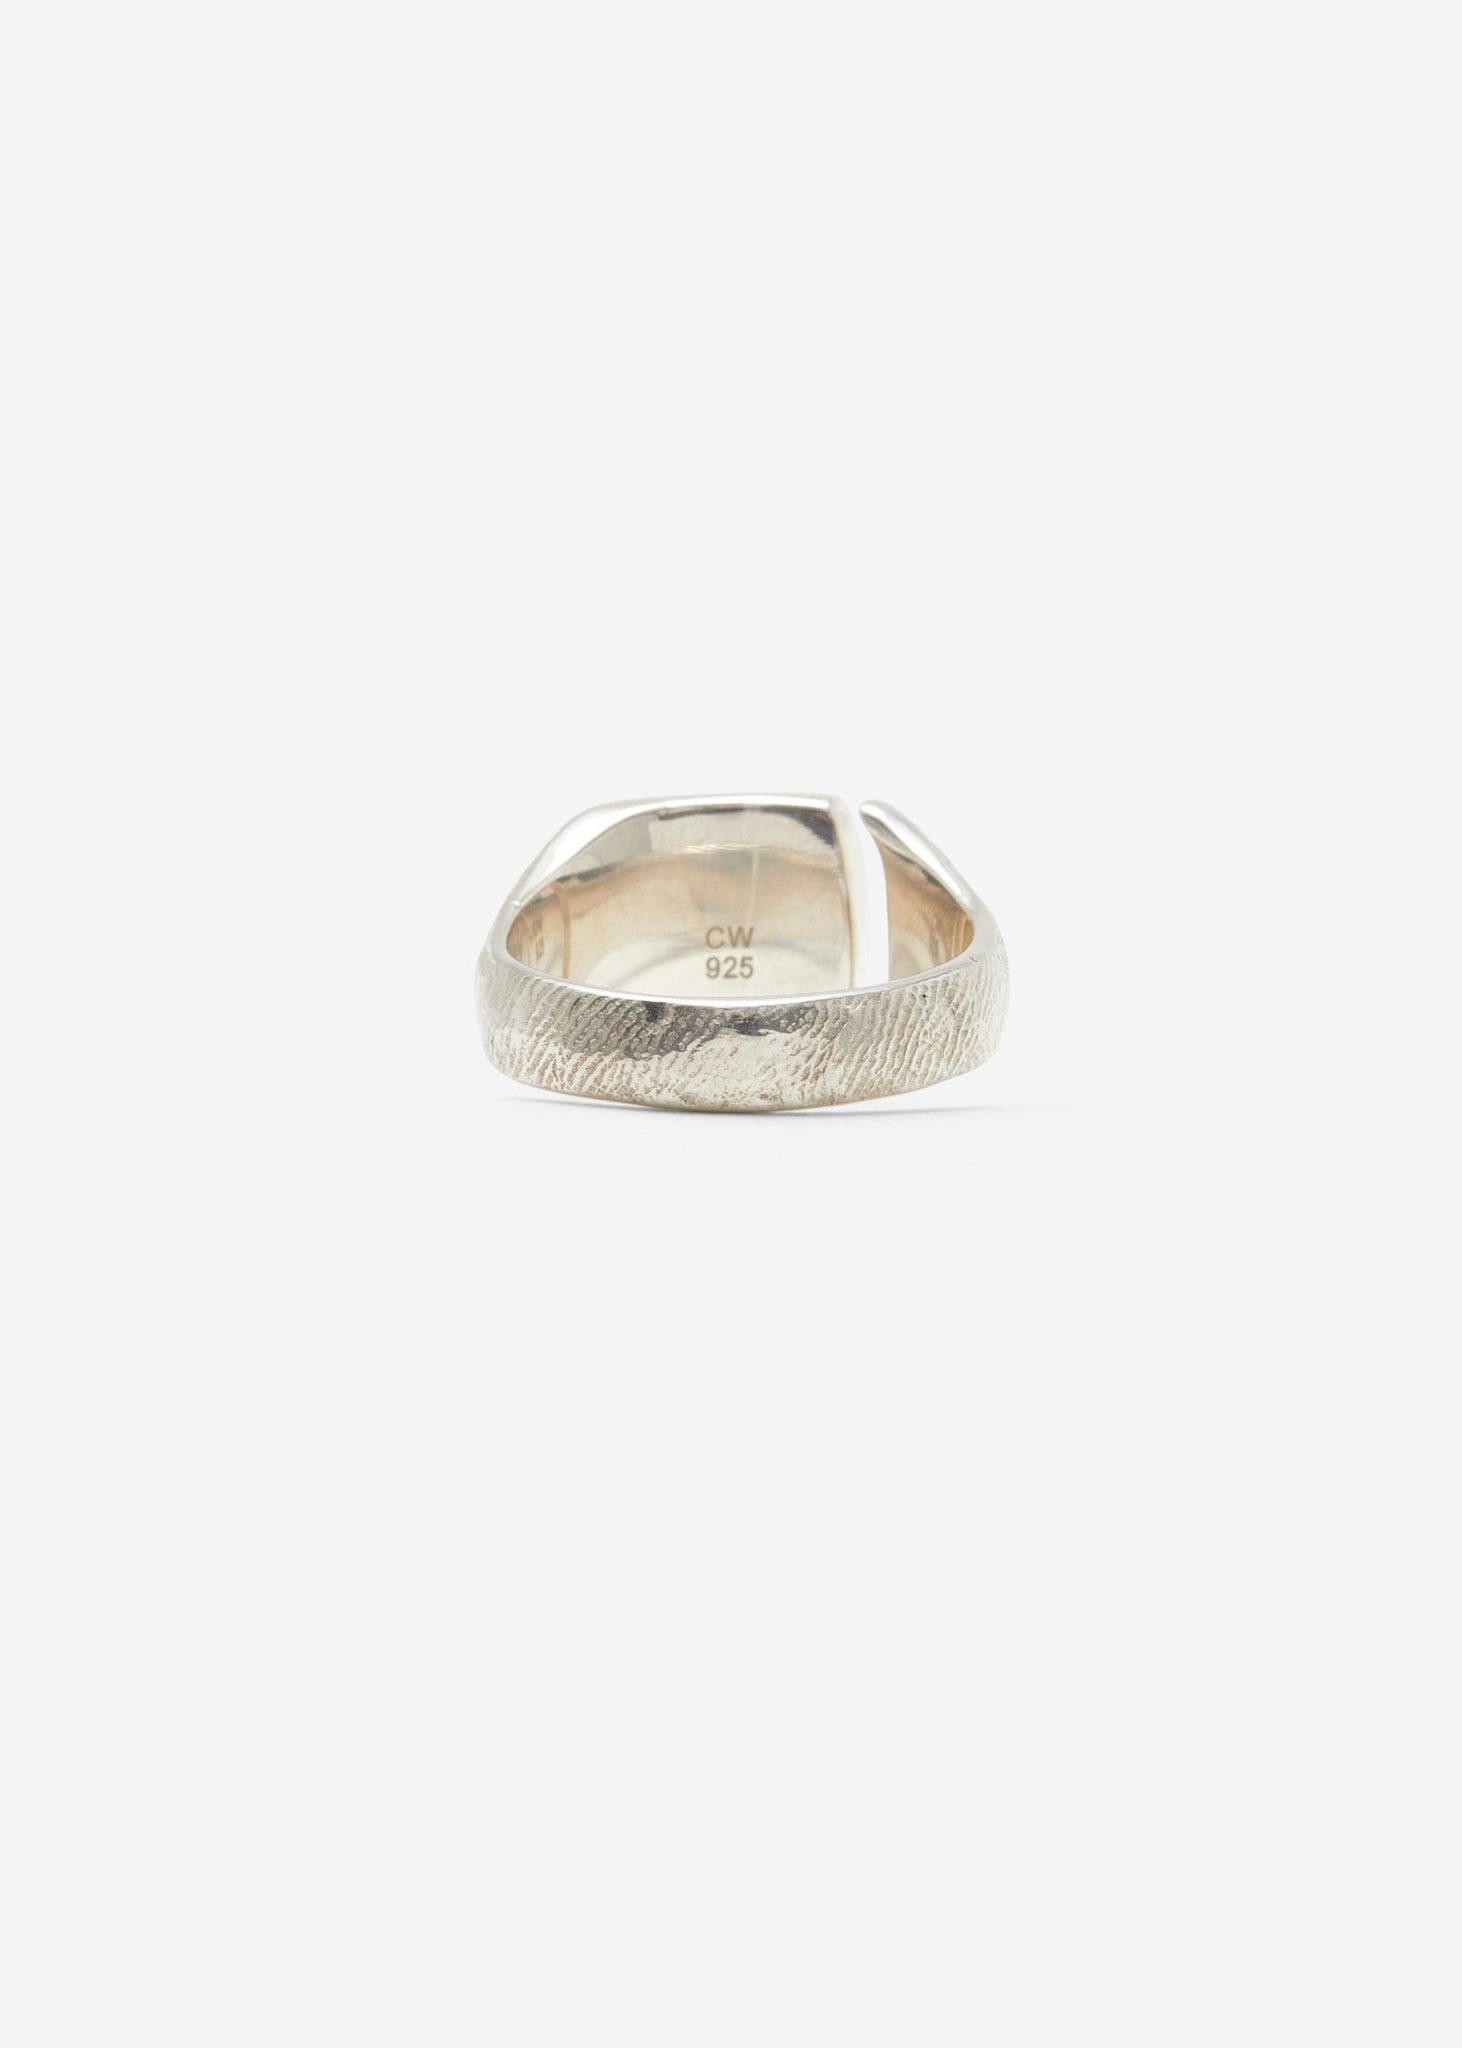 Molded Signet Ring - Rings - Cornelia Webb - 3